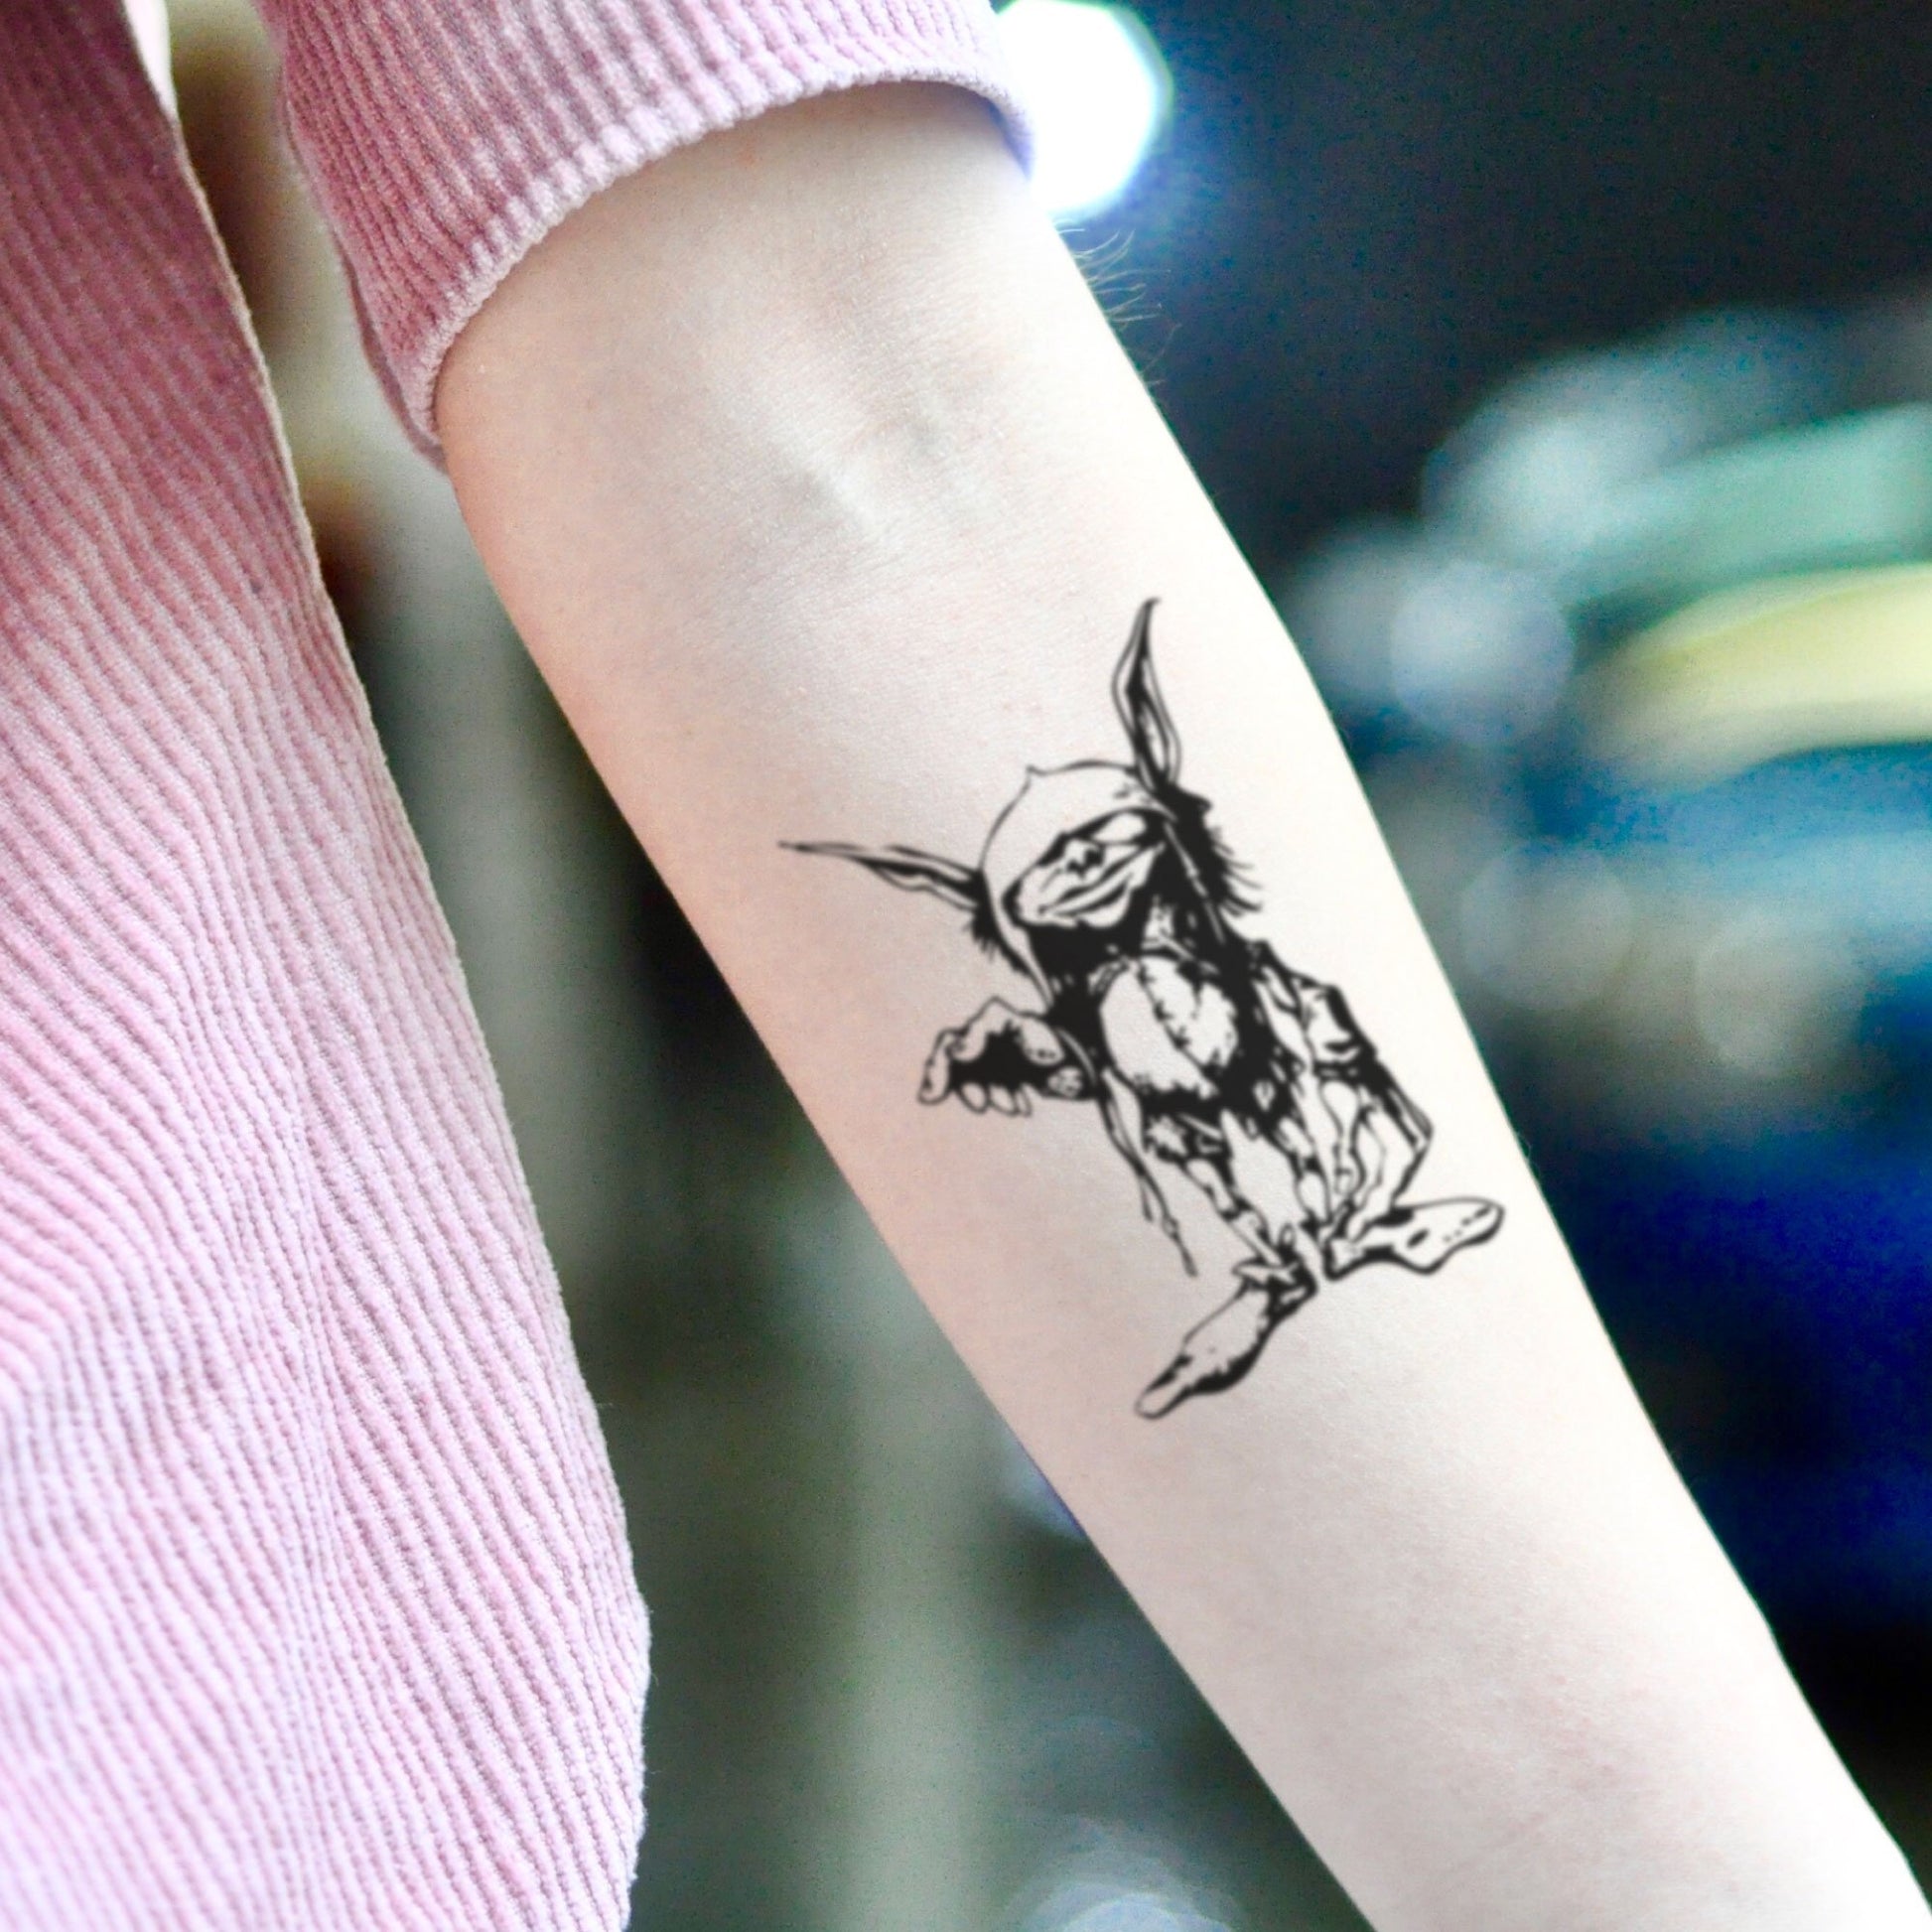 fake small green goblin illustrative temporary tattoo sticker design idea on inner arm